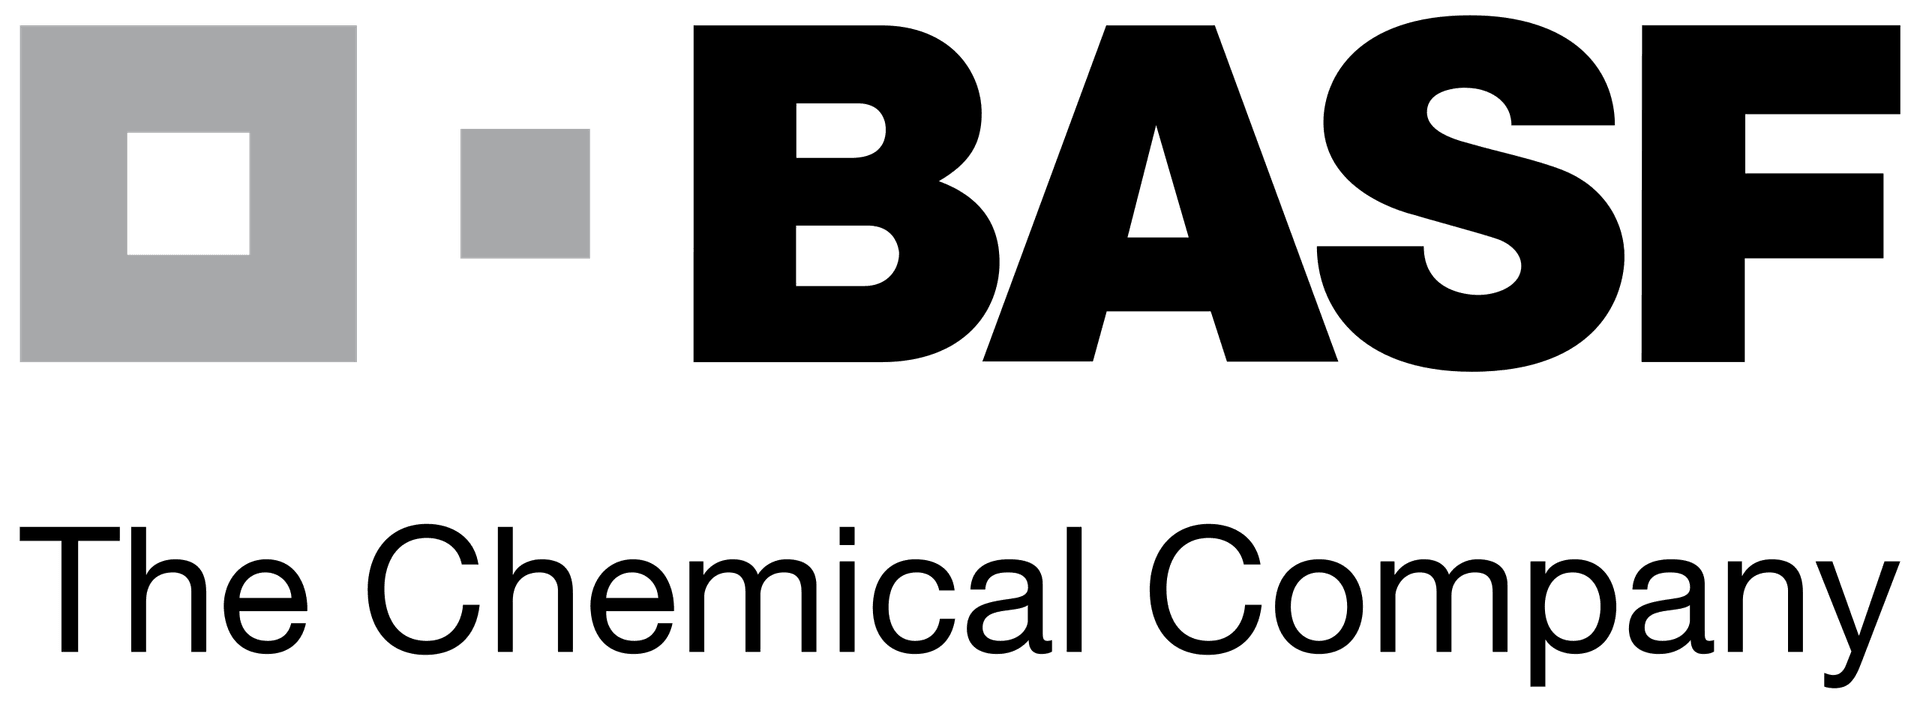 marketing strategy of BASF - logo